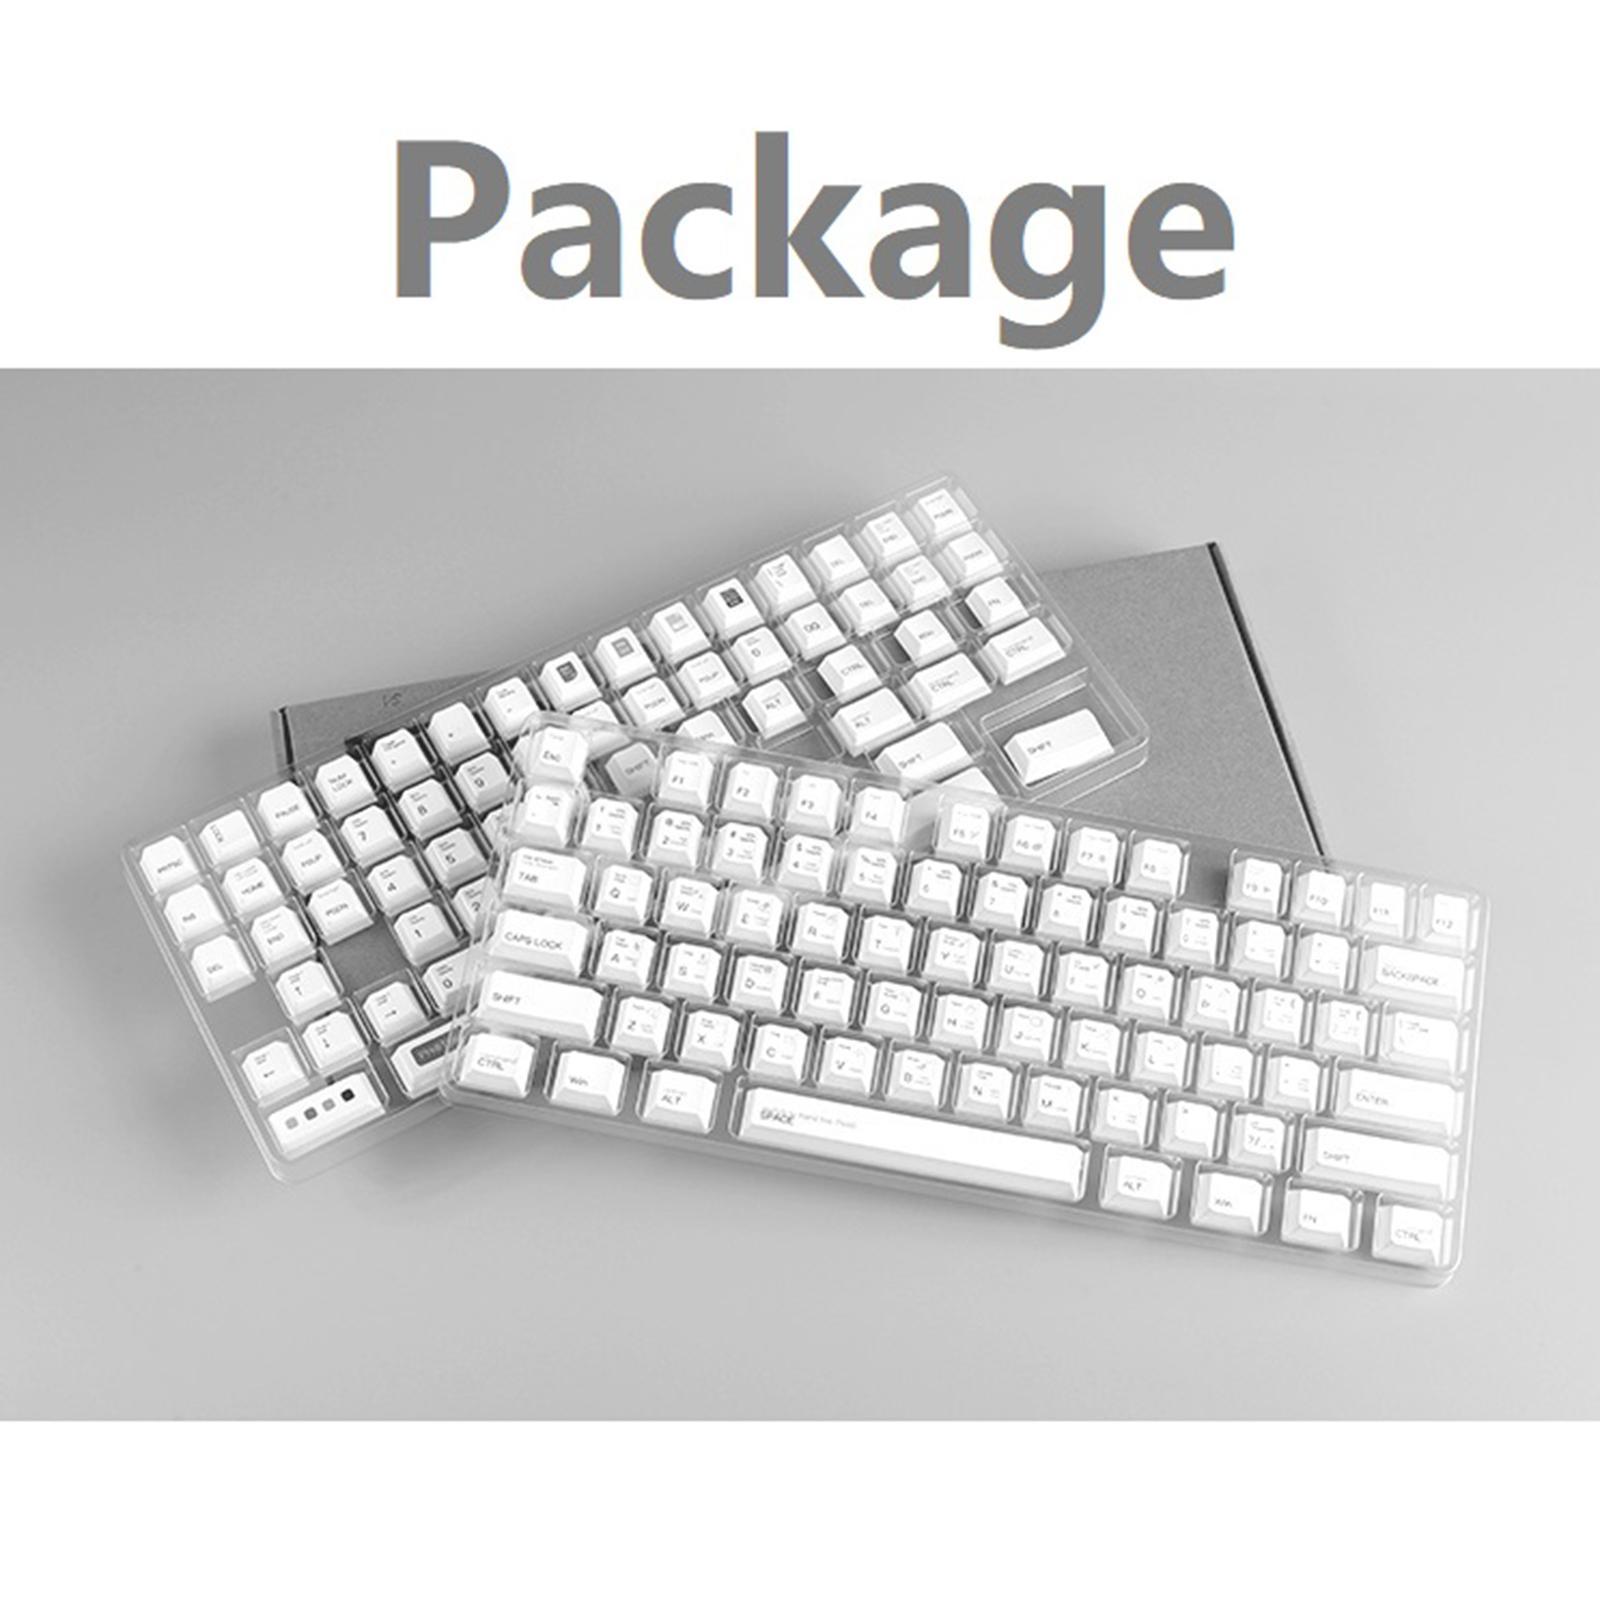 PBT 136 Keys Keycaps Cover for 64 72 87 Gaming Mechanical Keyboard Premium